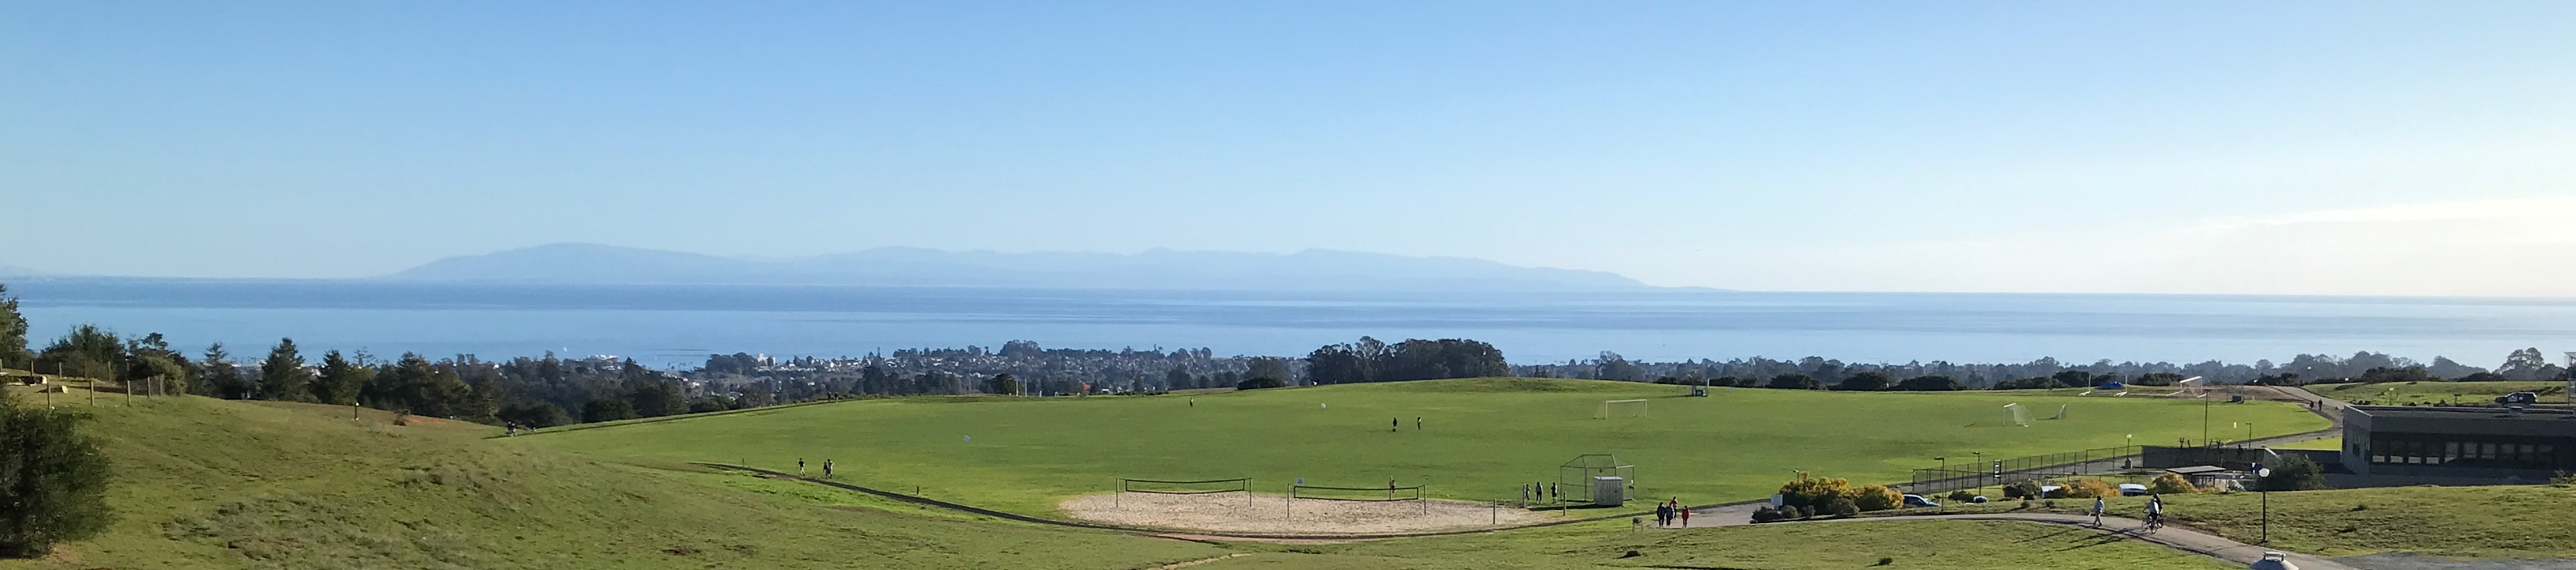 East Field at UC Santa Cruz.